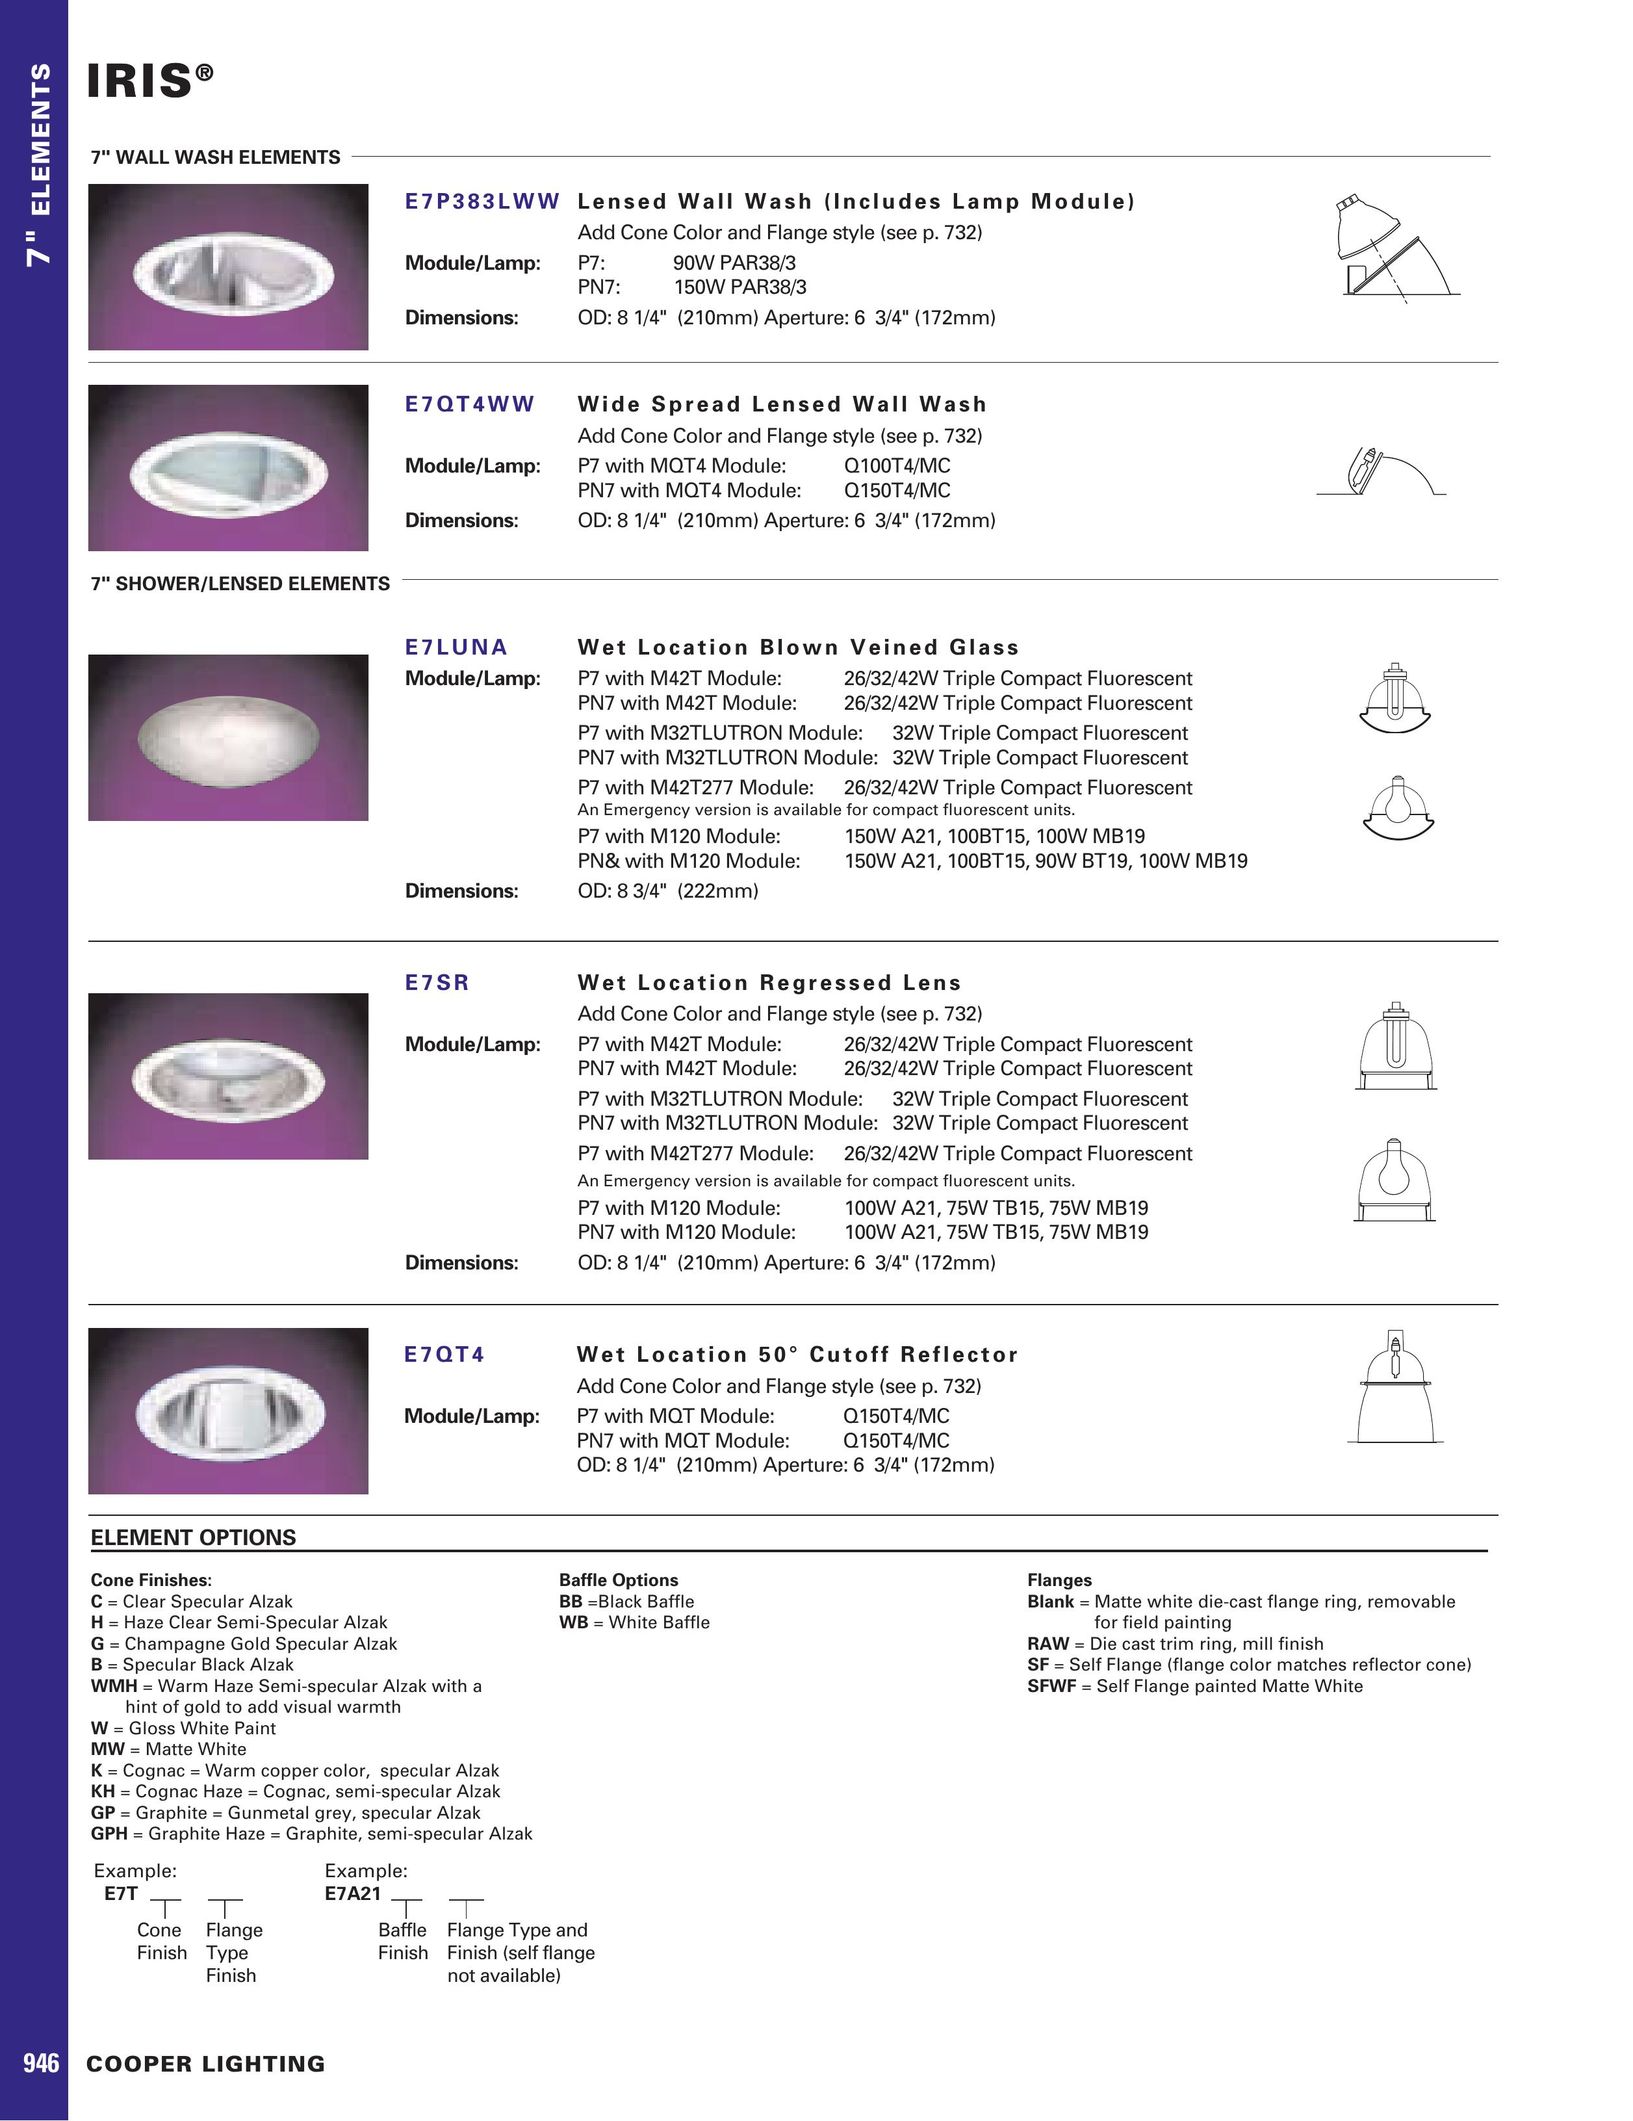 IRIS P2B-VM Indoor Furnishings User Manual